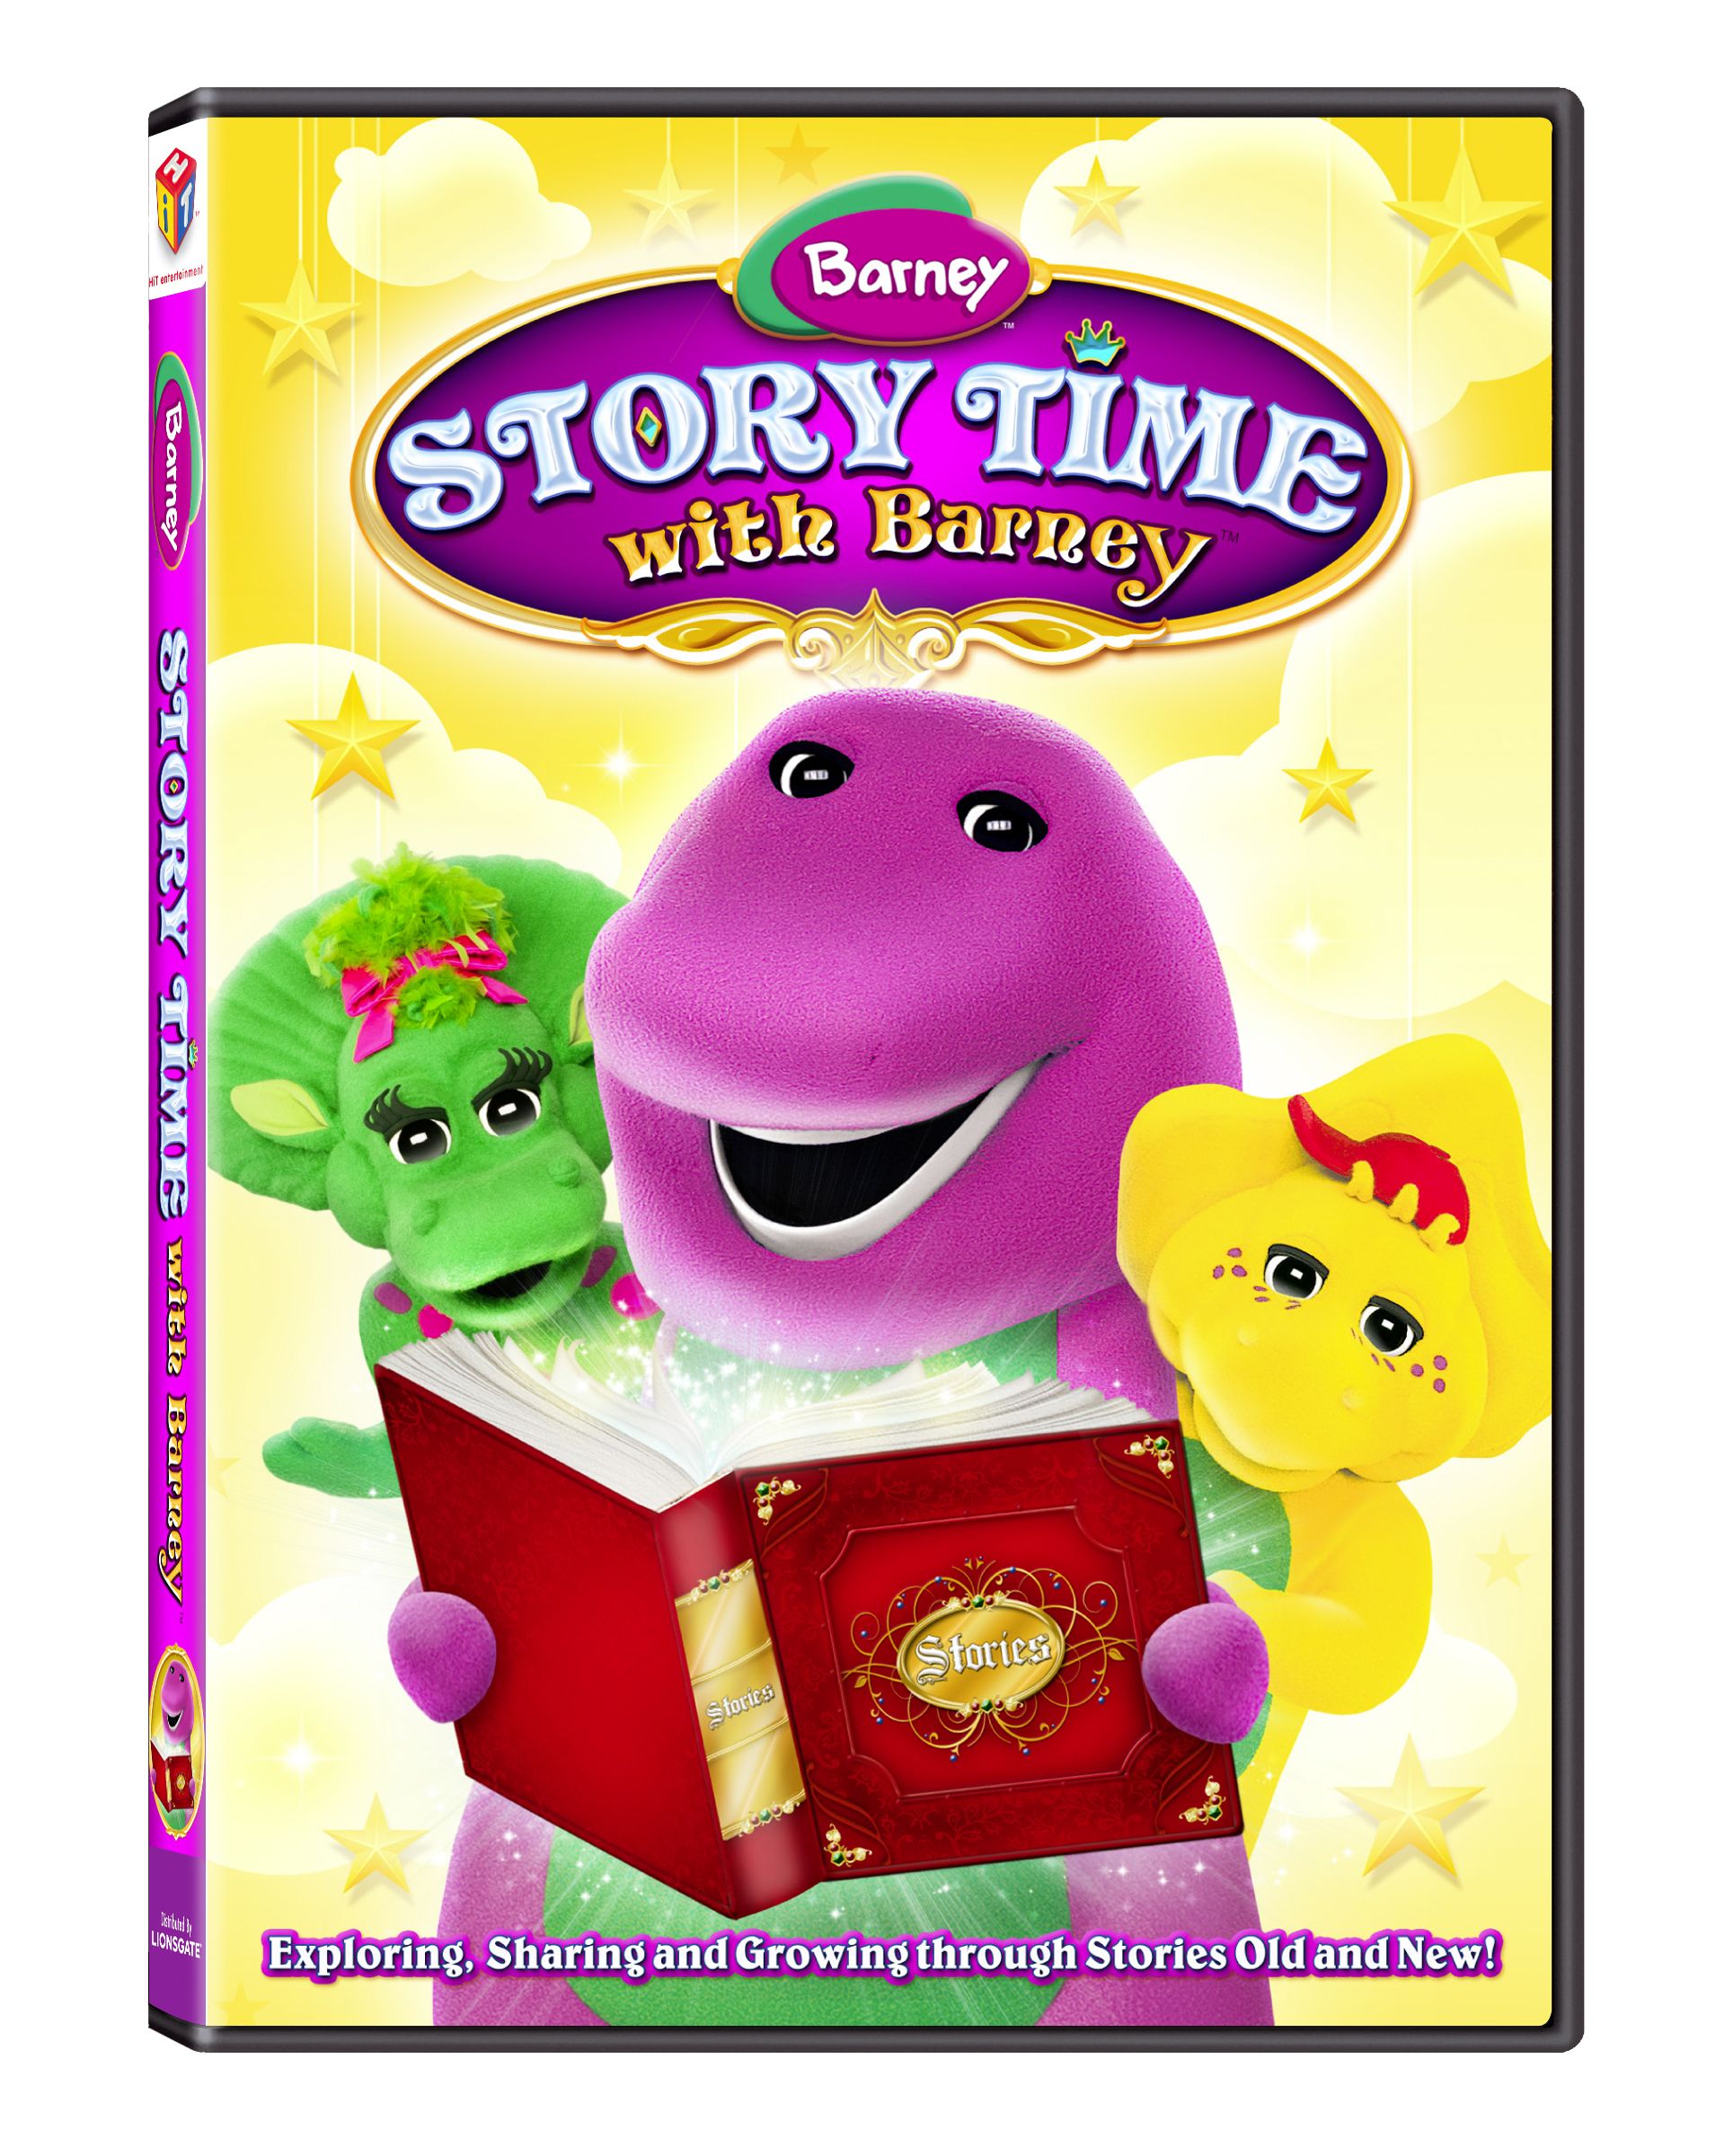 Barney Story time